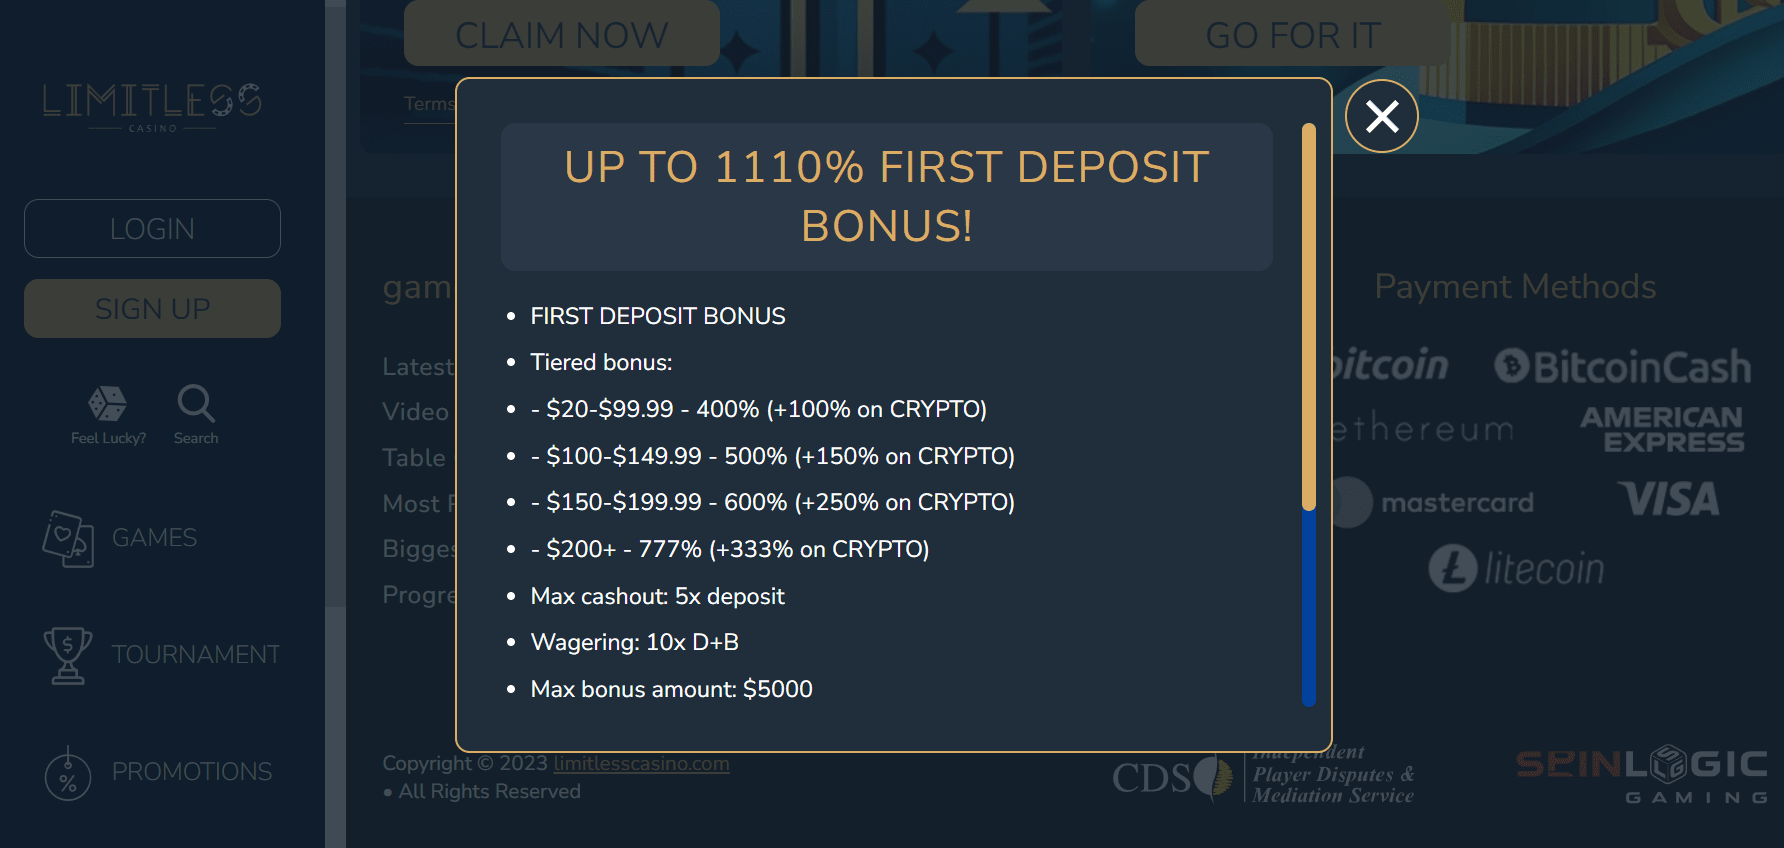 Limitless Casino first deposit bonus